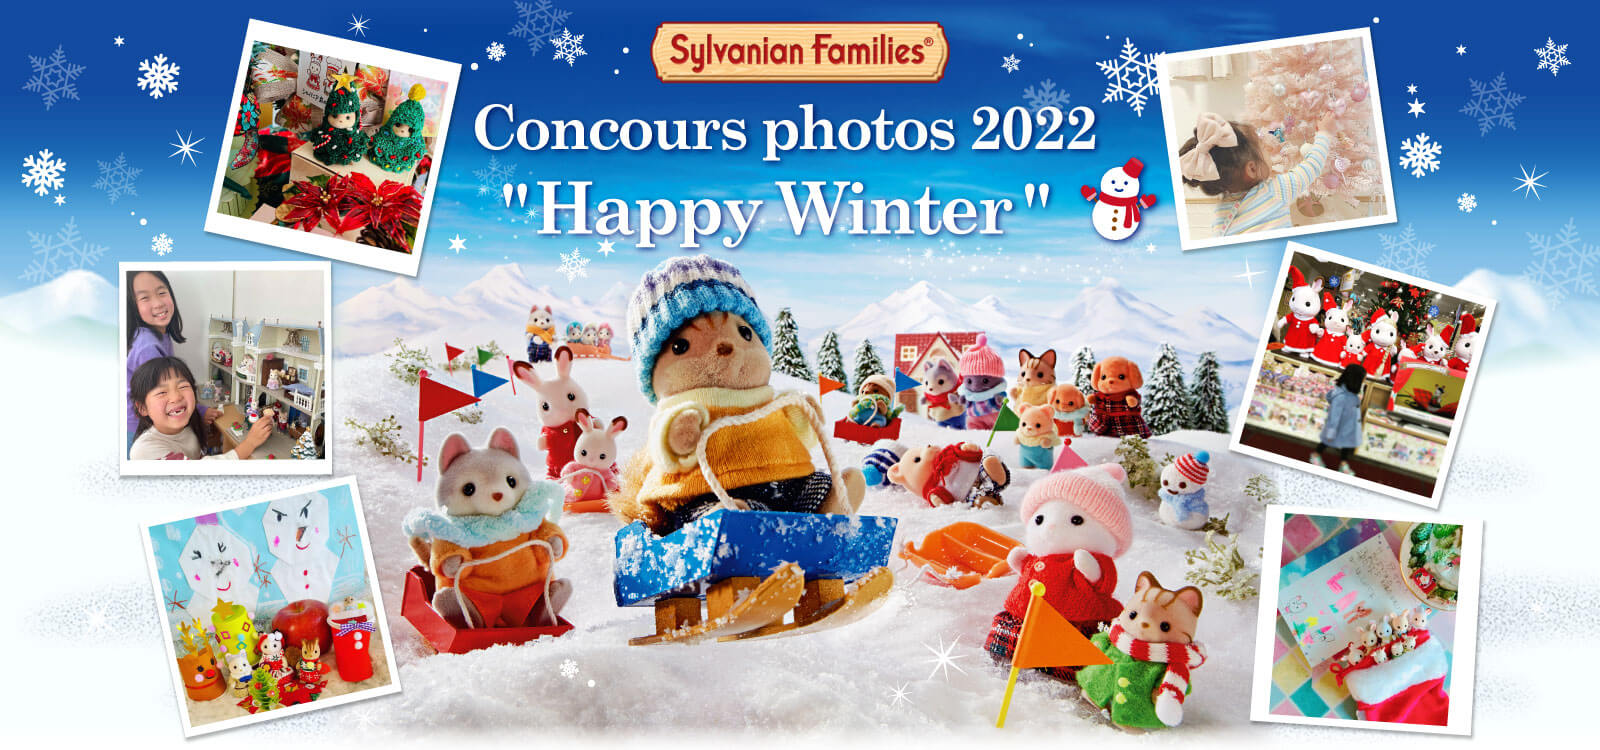 Sylvanian Families Happy Winter Photo Contest 2022